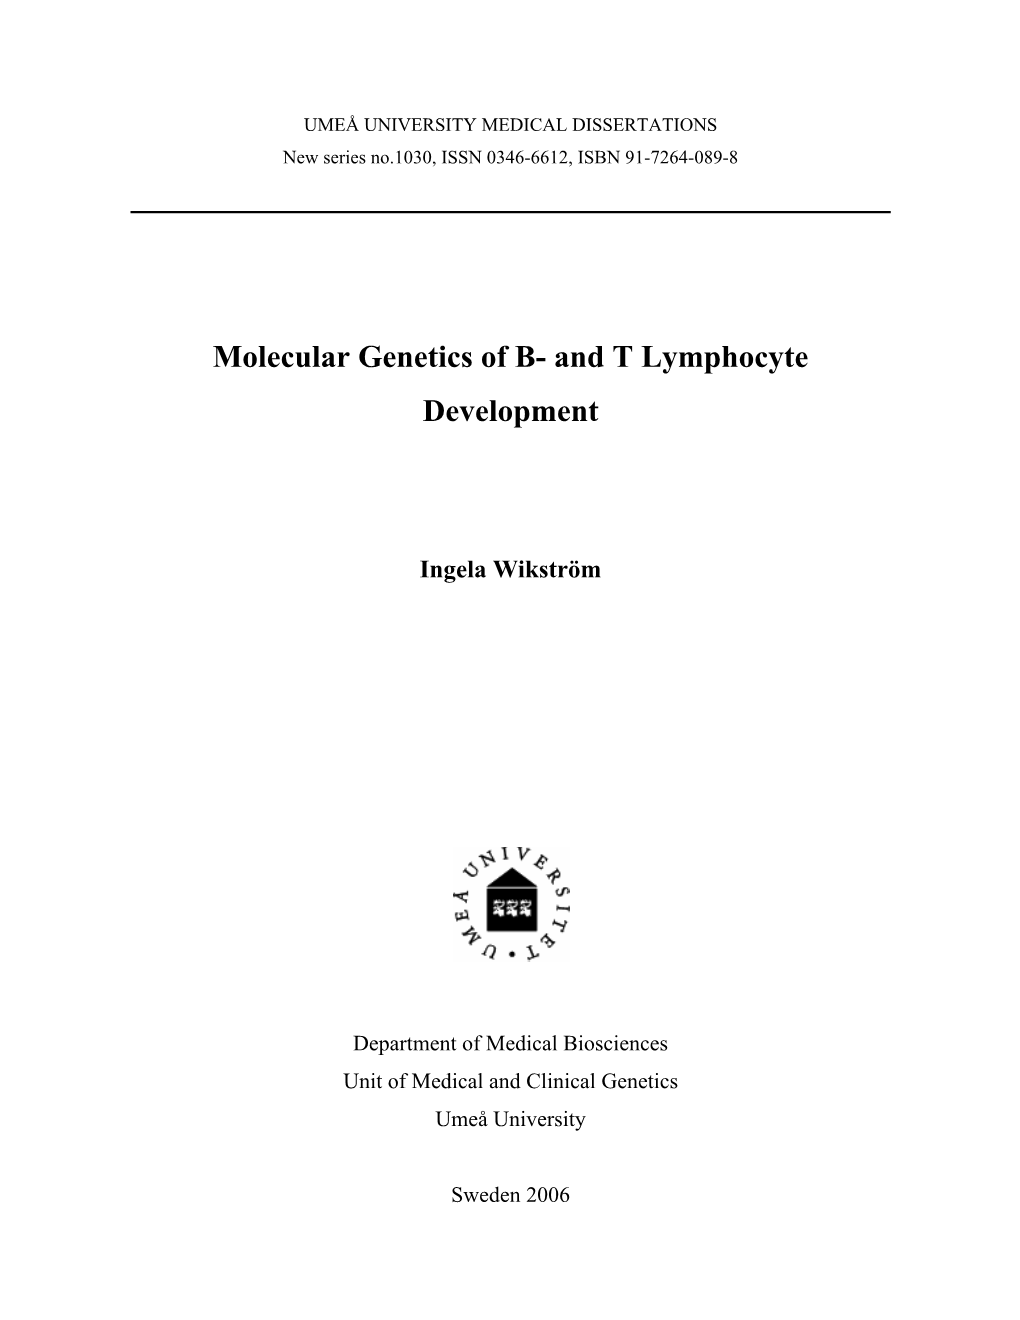 Molecular Genetics of B- and T Lymphocyte Development